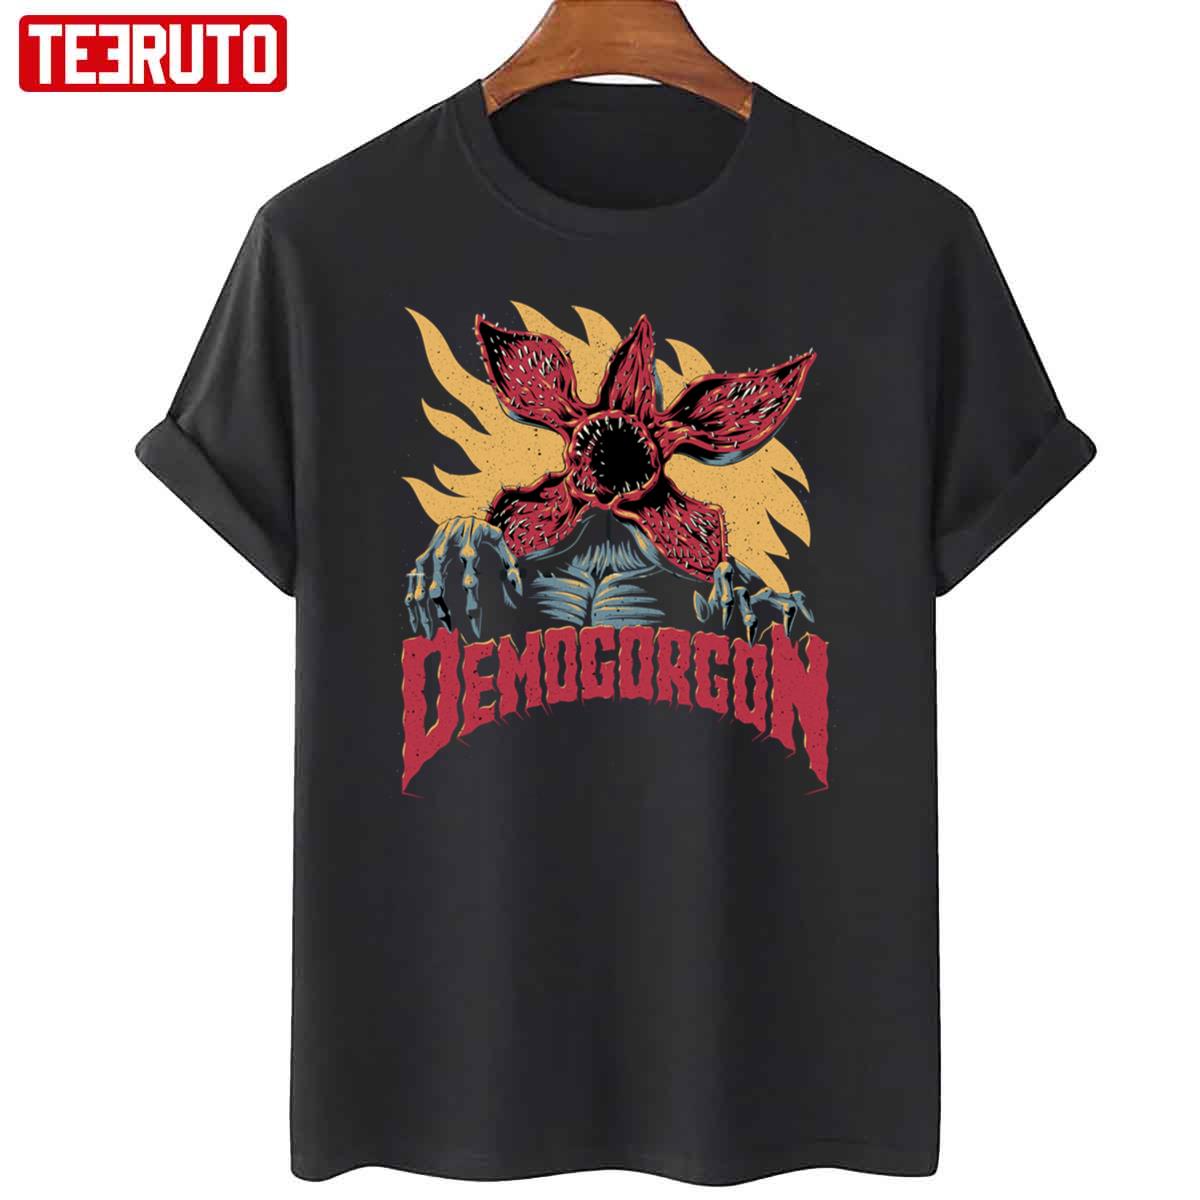 Demogorgon Stranger Things Netflix Series Artwork Unisex T-Shirt